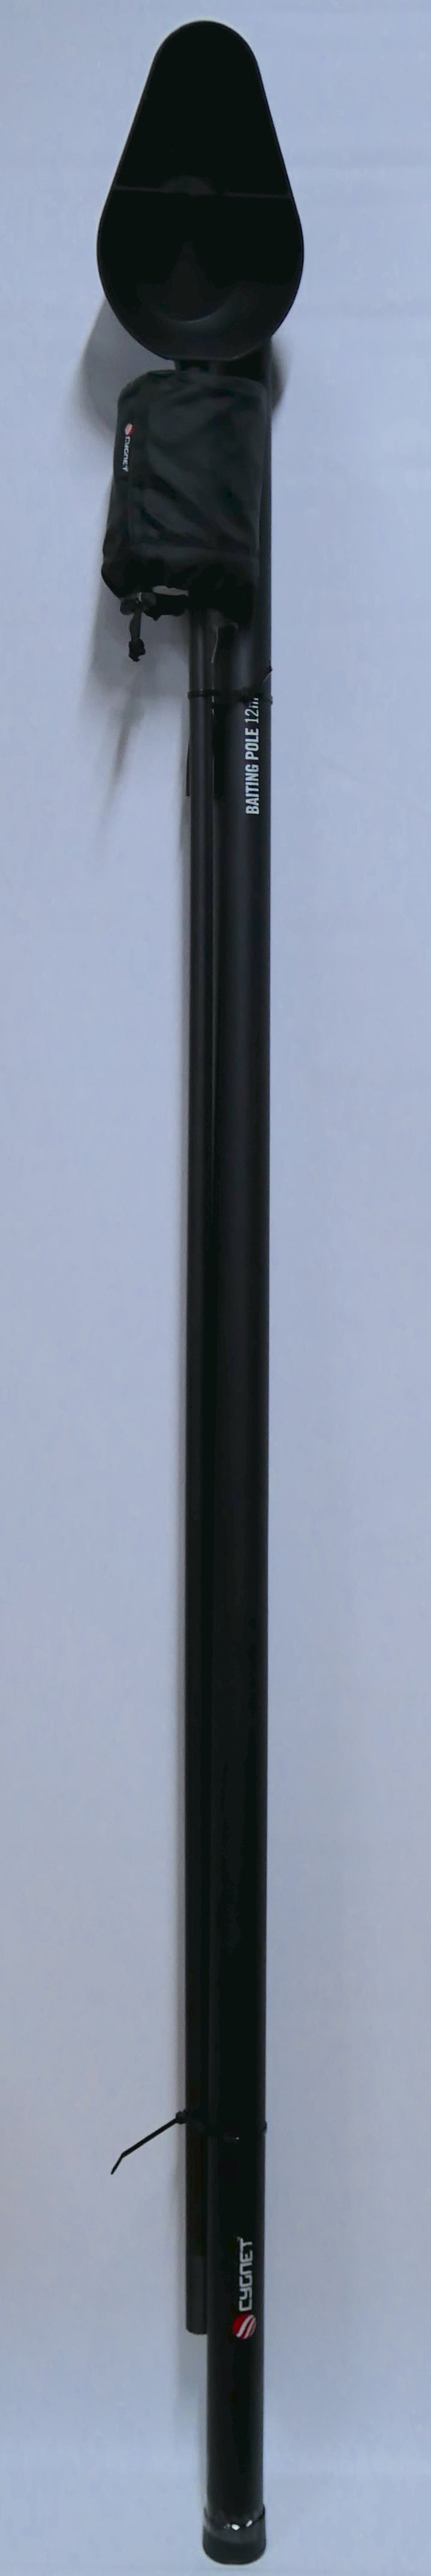 Cygnet 12m Baiting Pole